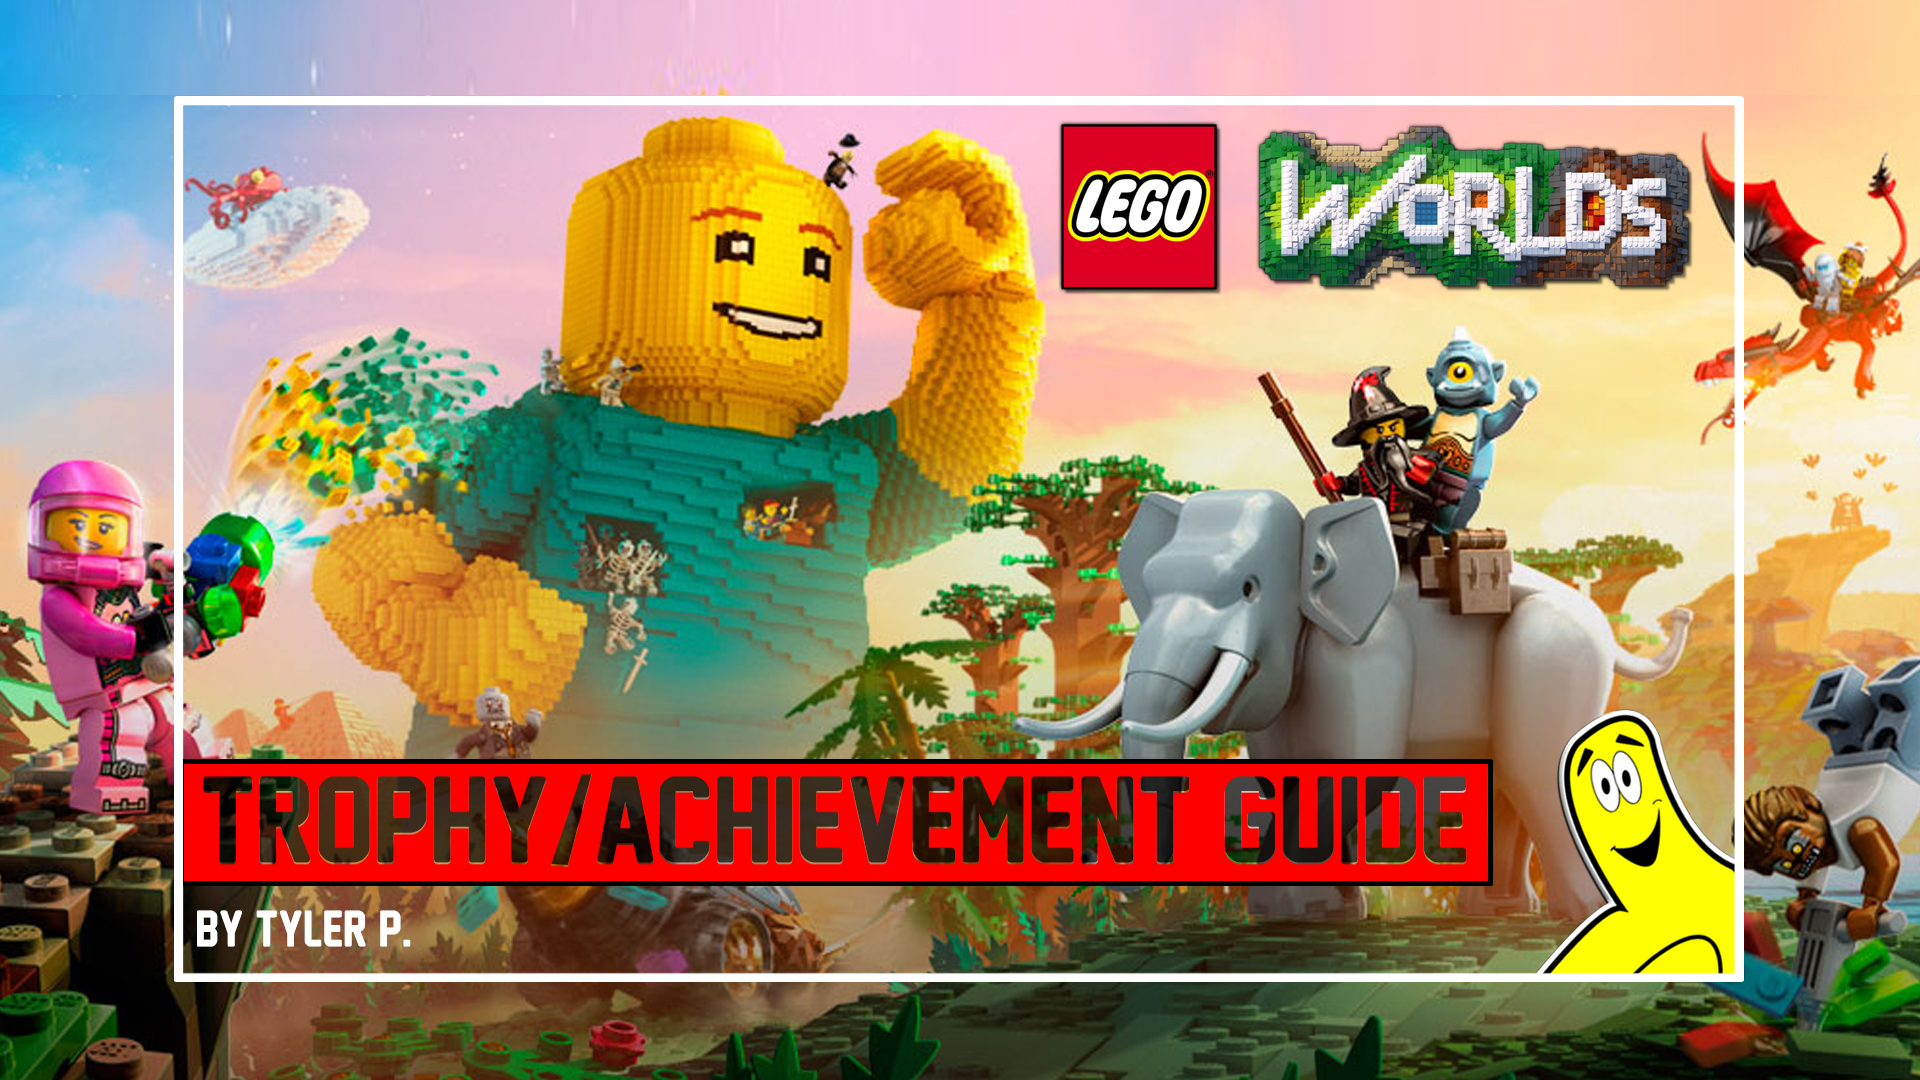 LegoWorldsGuideHeader